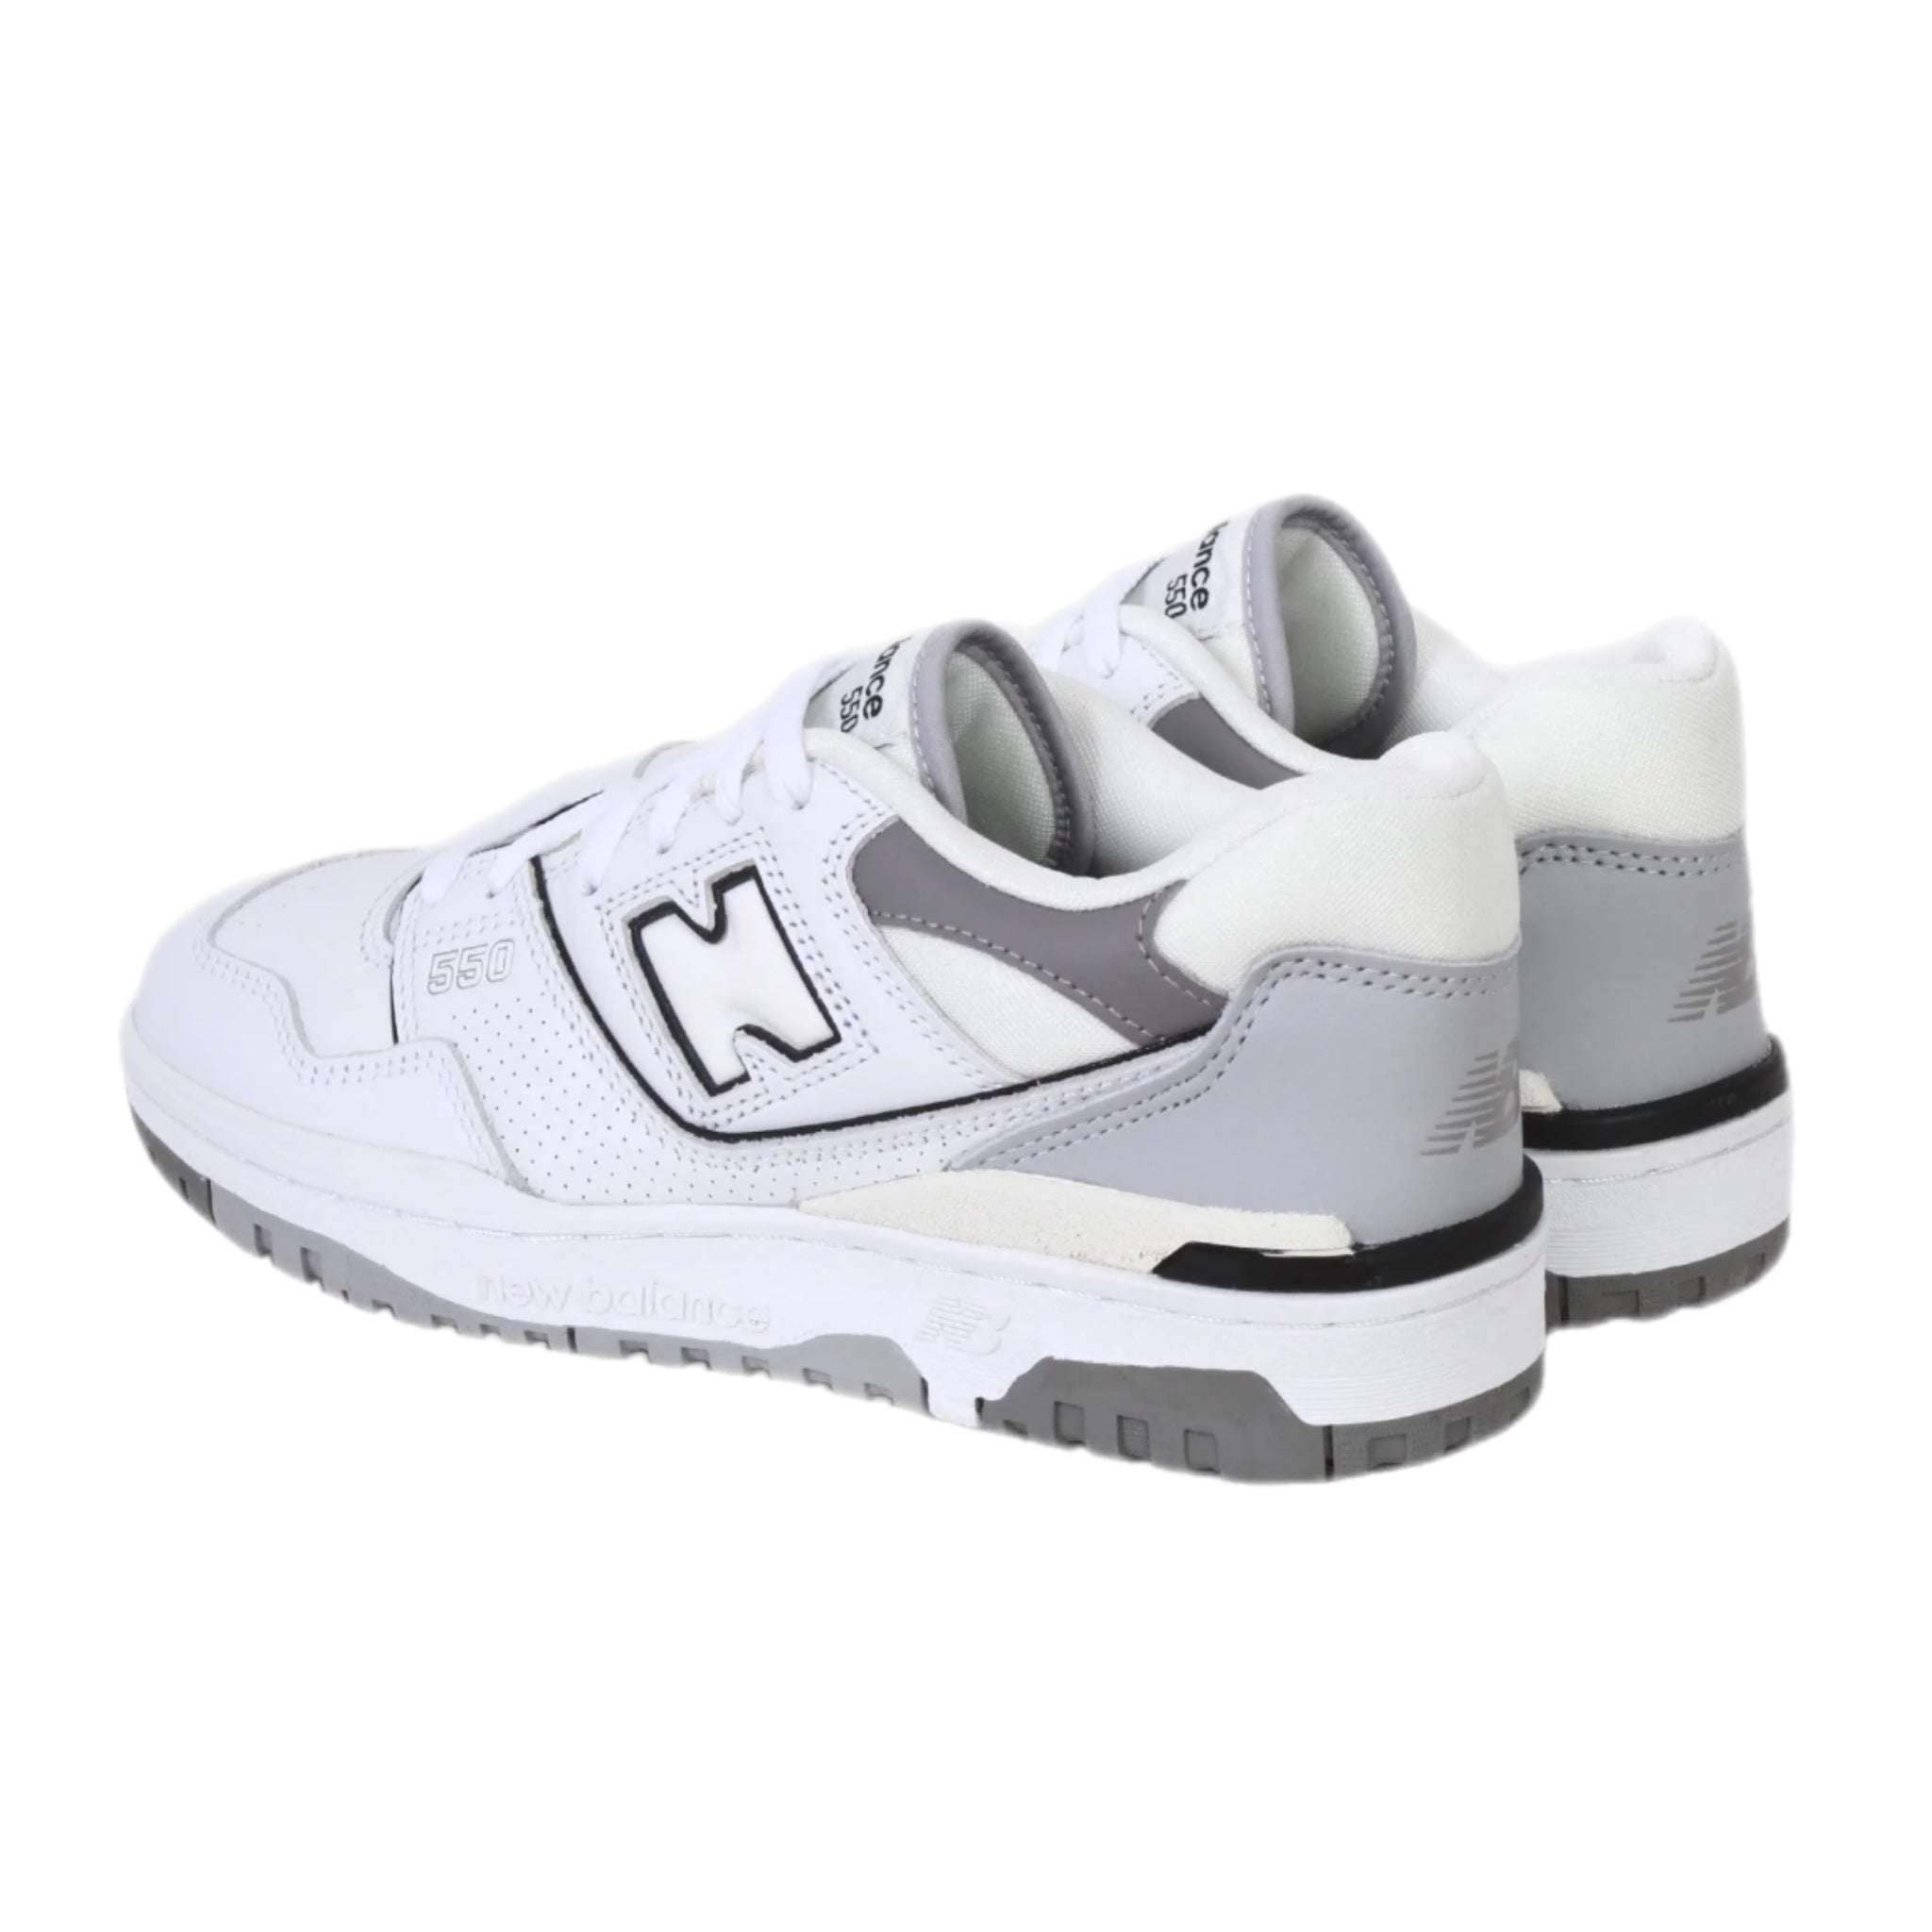 New Balance 550 White/Grey/Black